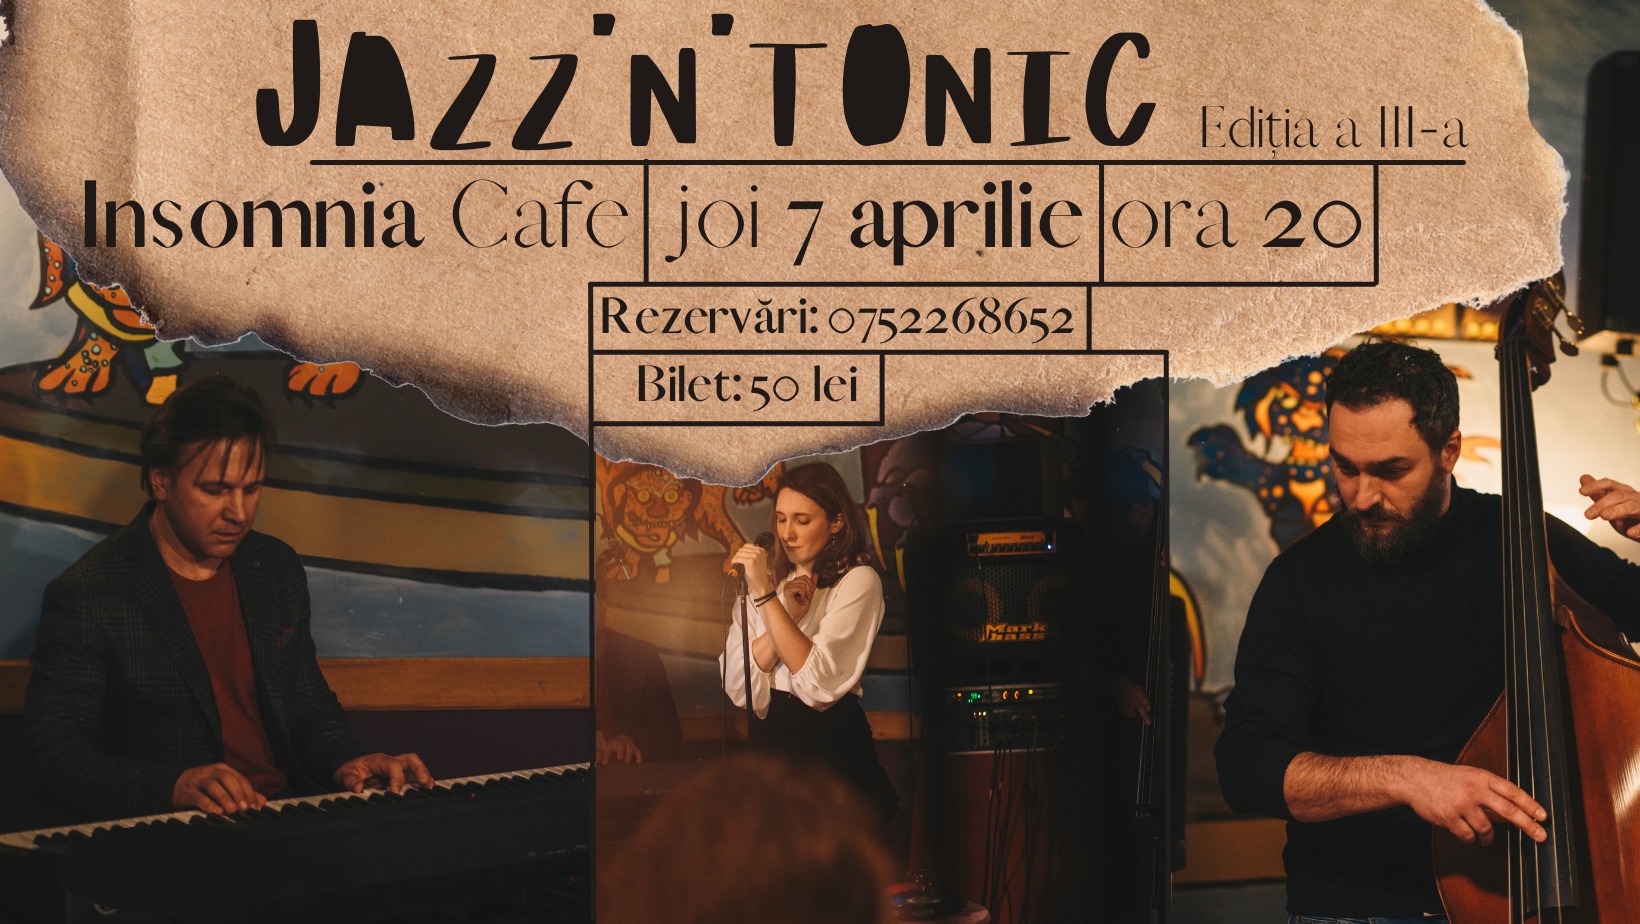 Jazz'n'tonic-ediția a III-a